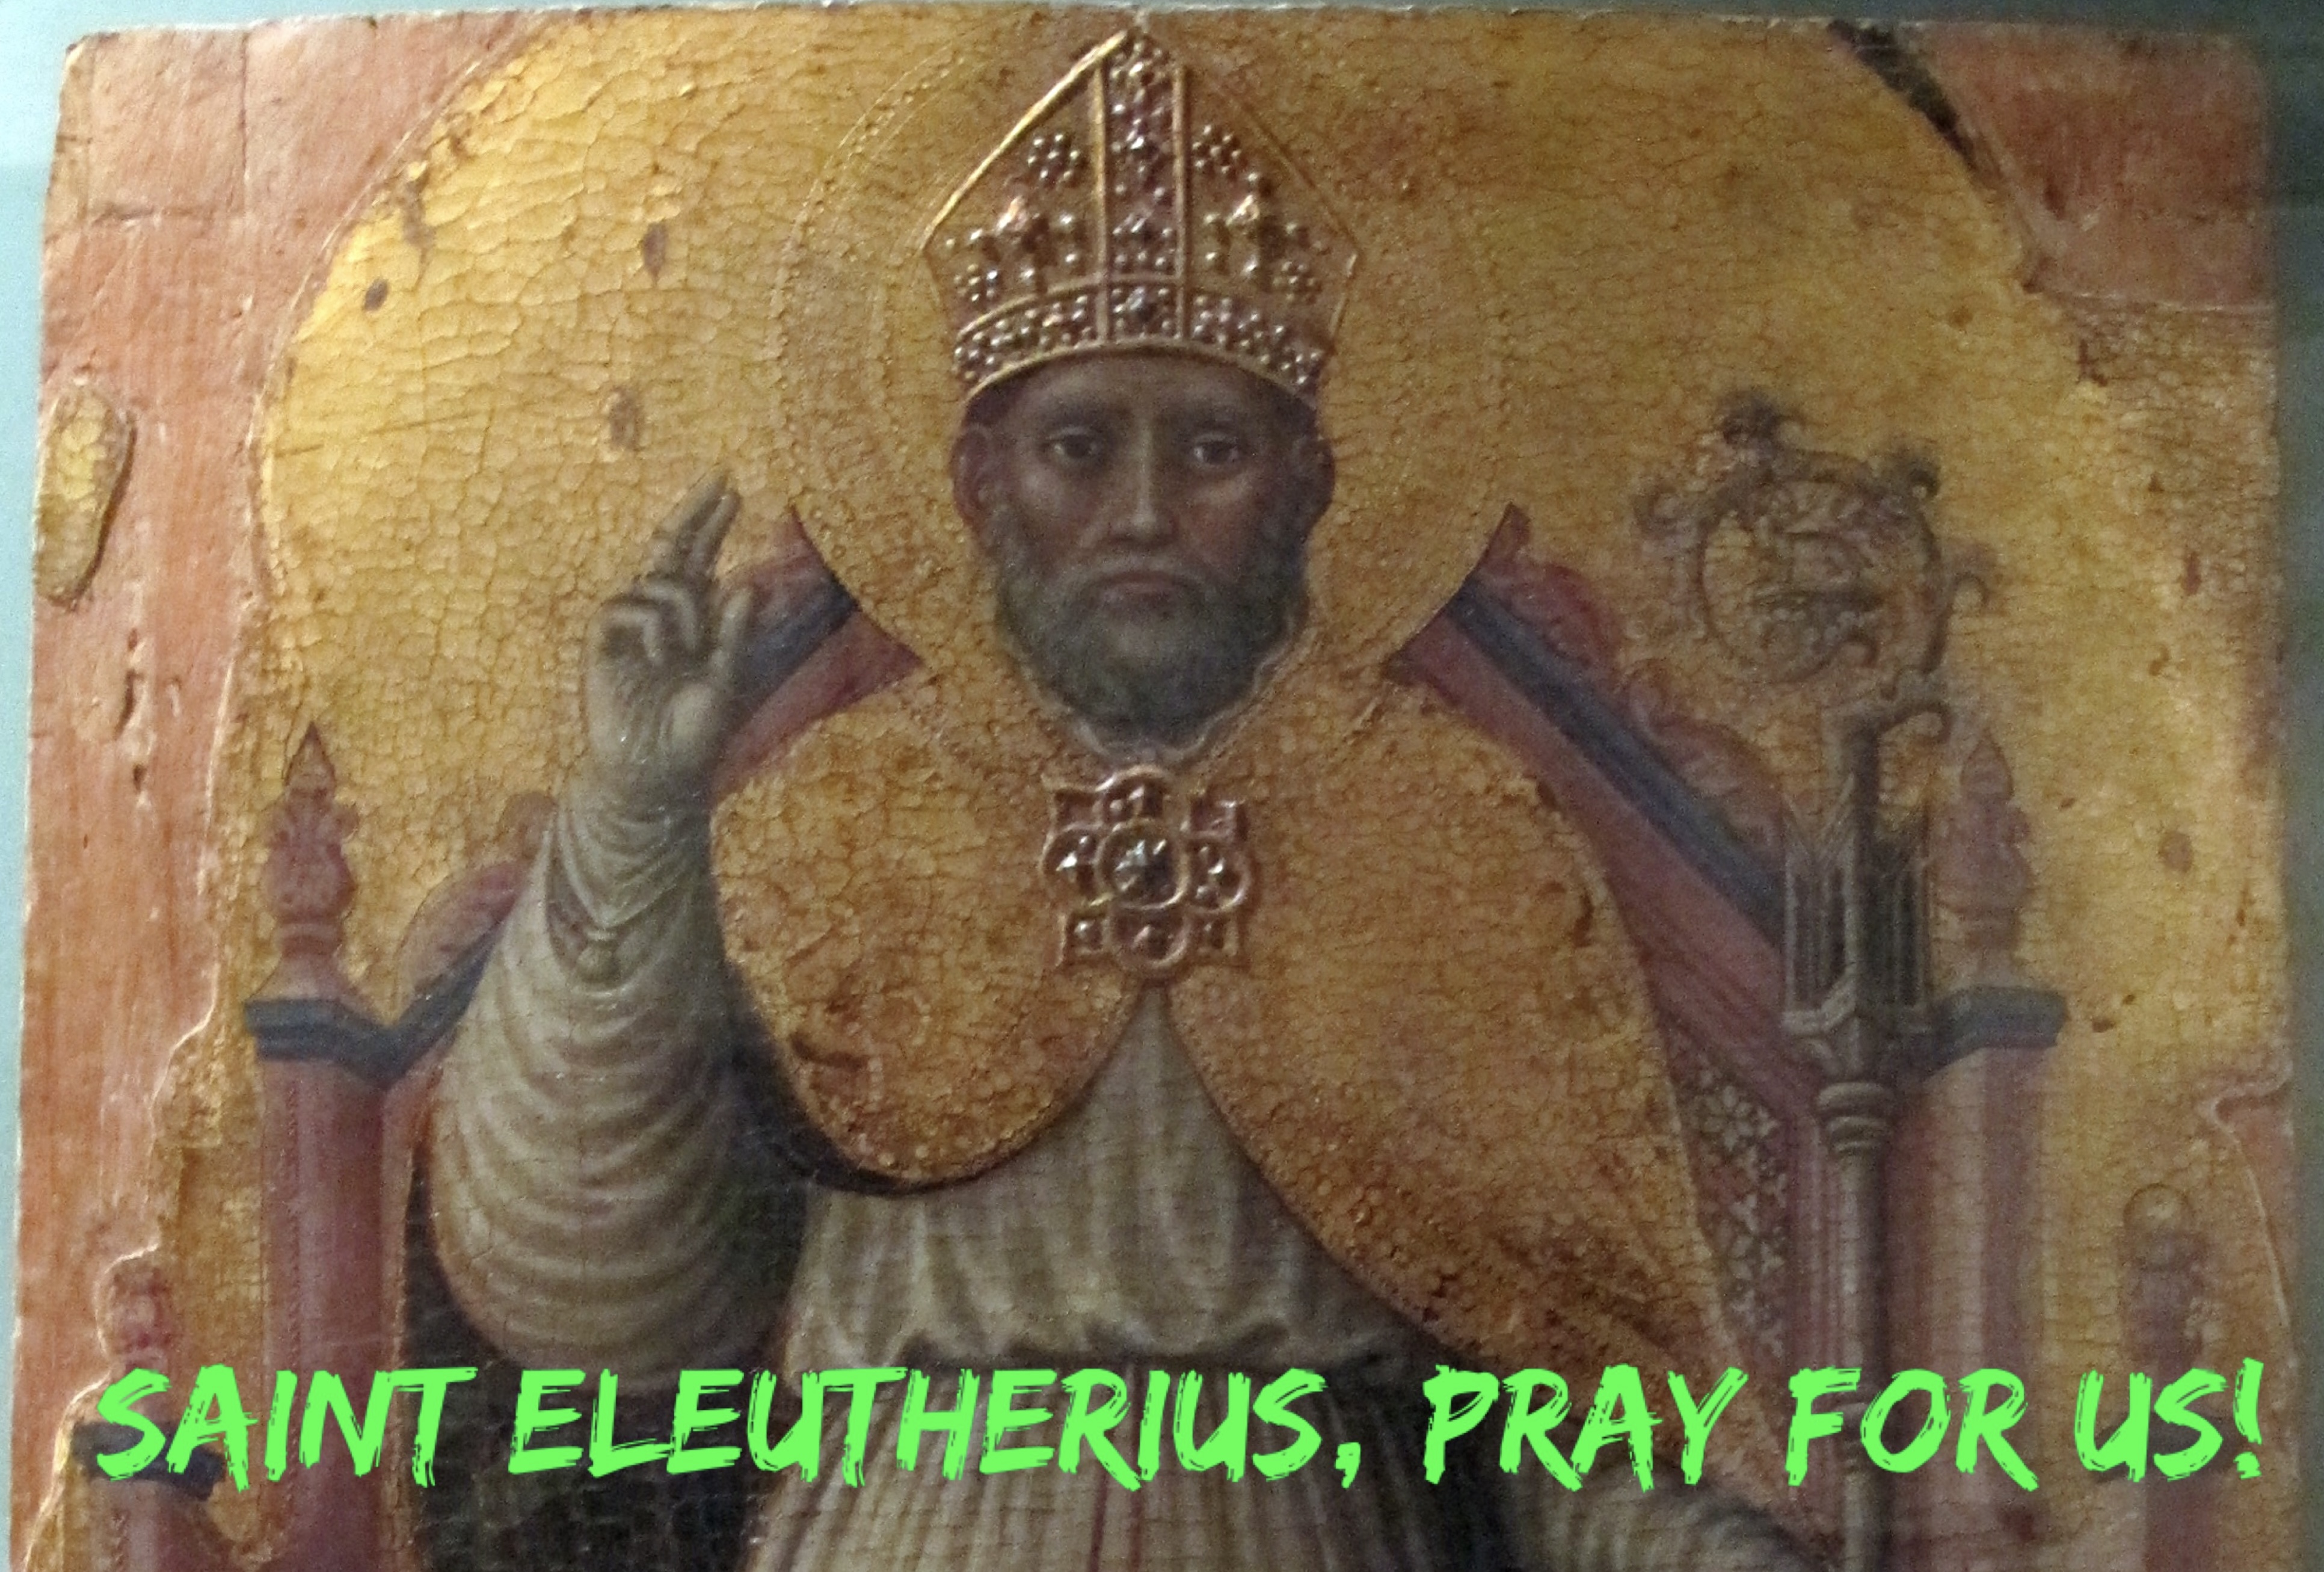 6th September – Saint Eleutherius